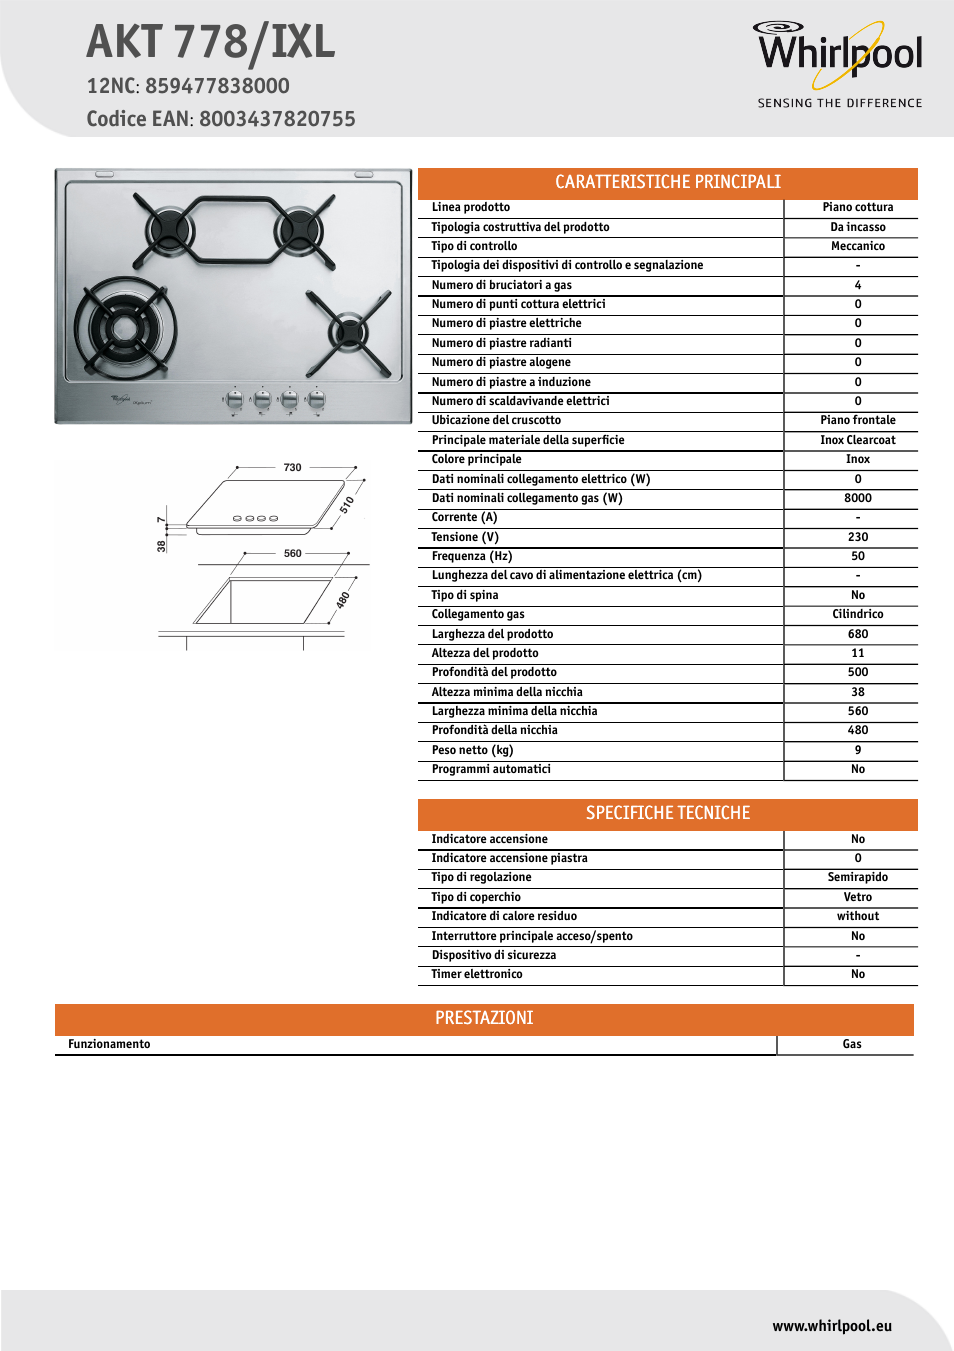 Whirlpool AKT 778-IXL Manuale d'uso | Pagine: 1